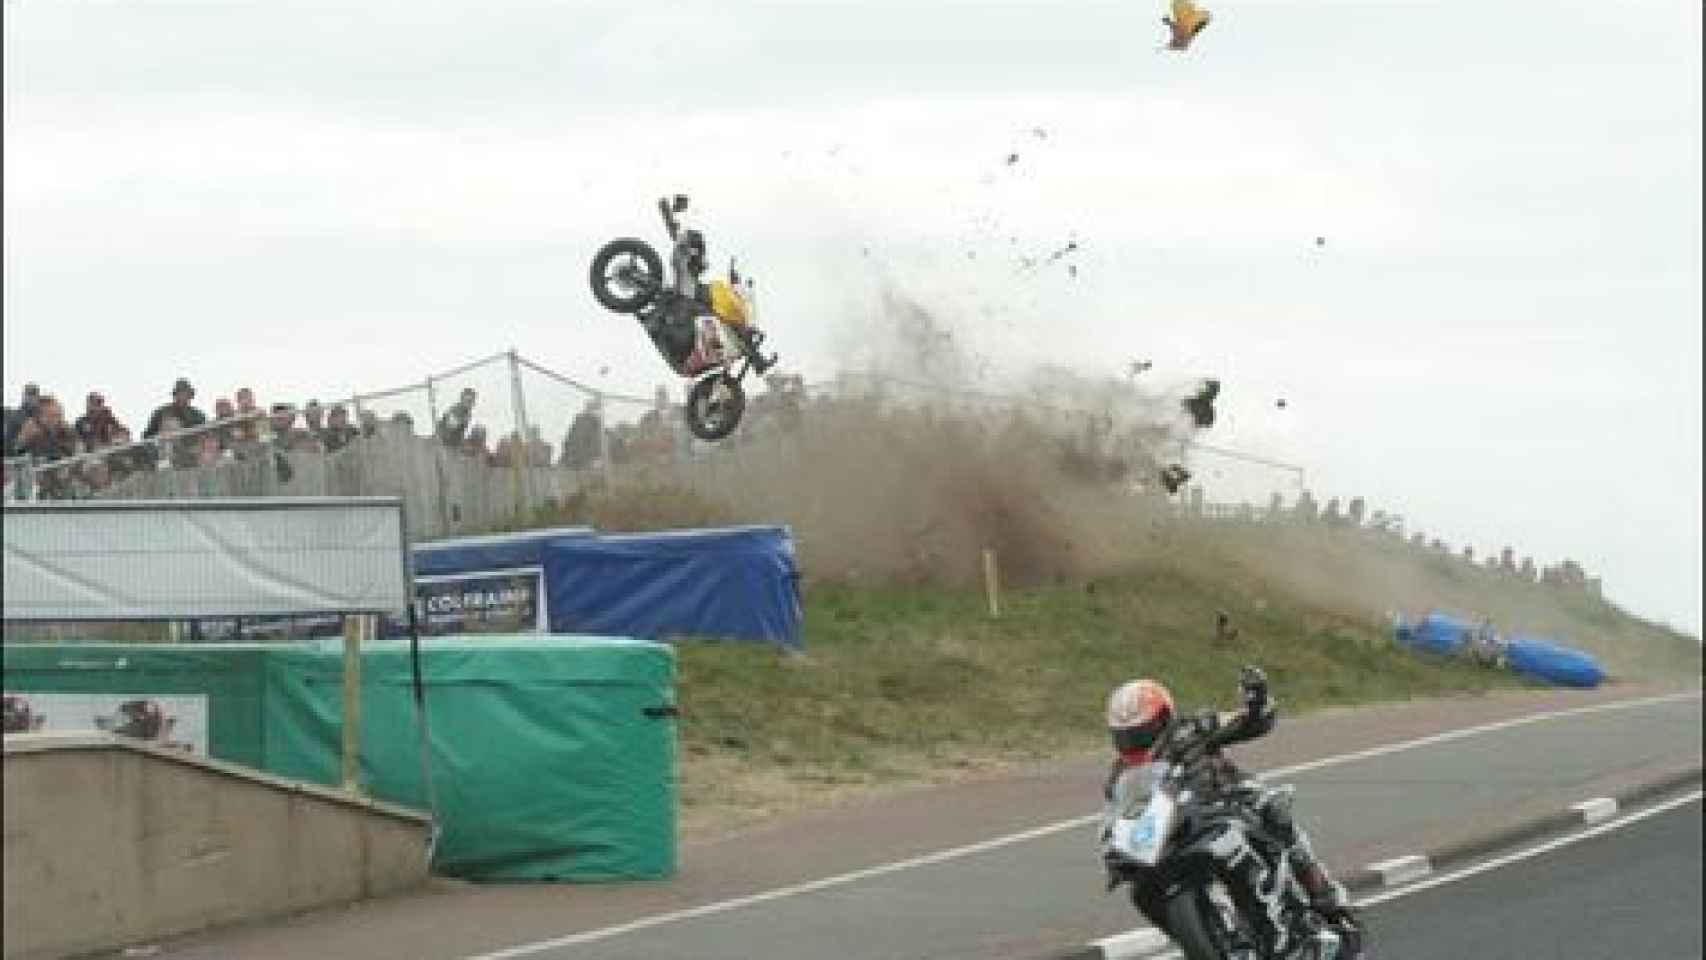 Britânico morre durante tradicional corrida de motos na Ilha de Man, motor